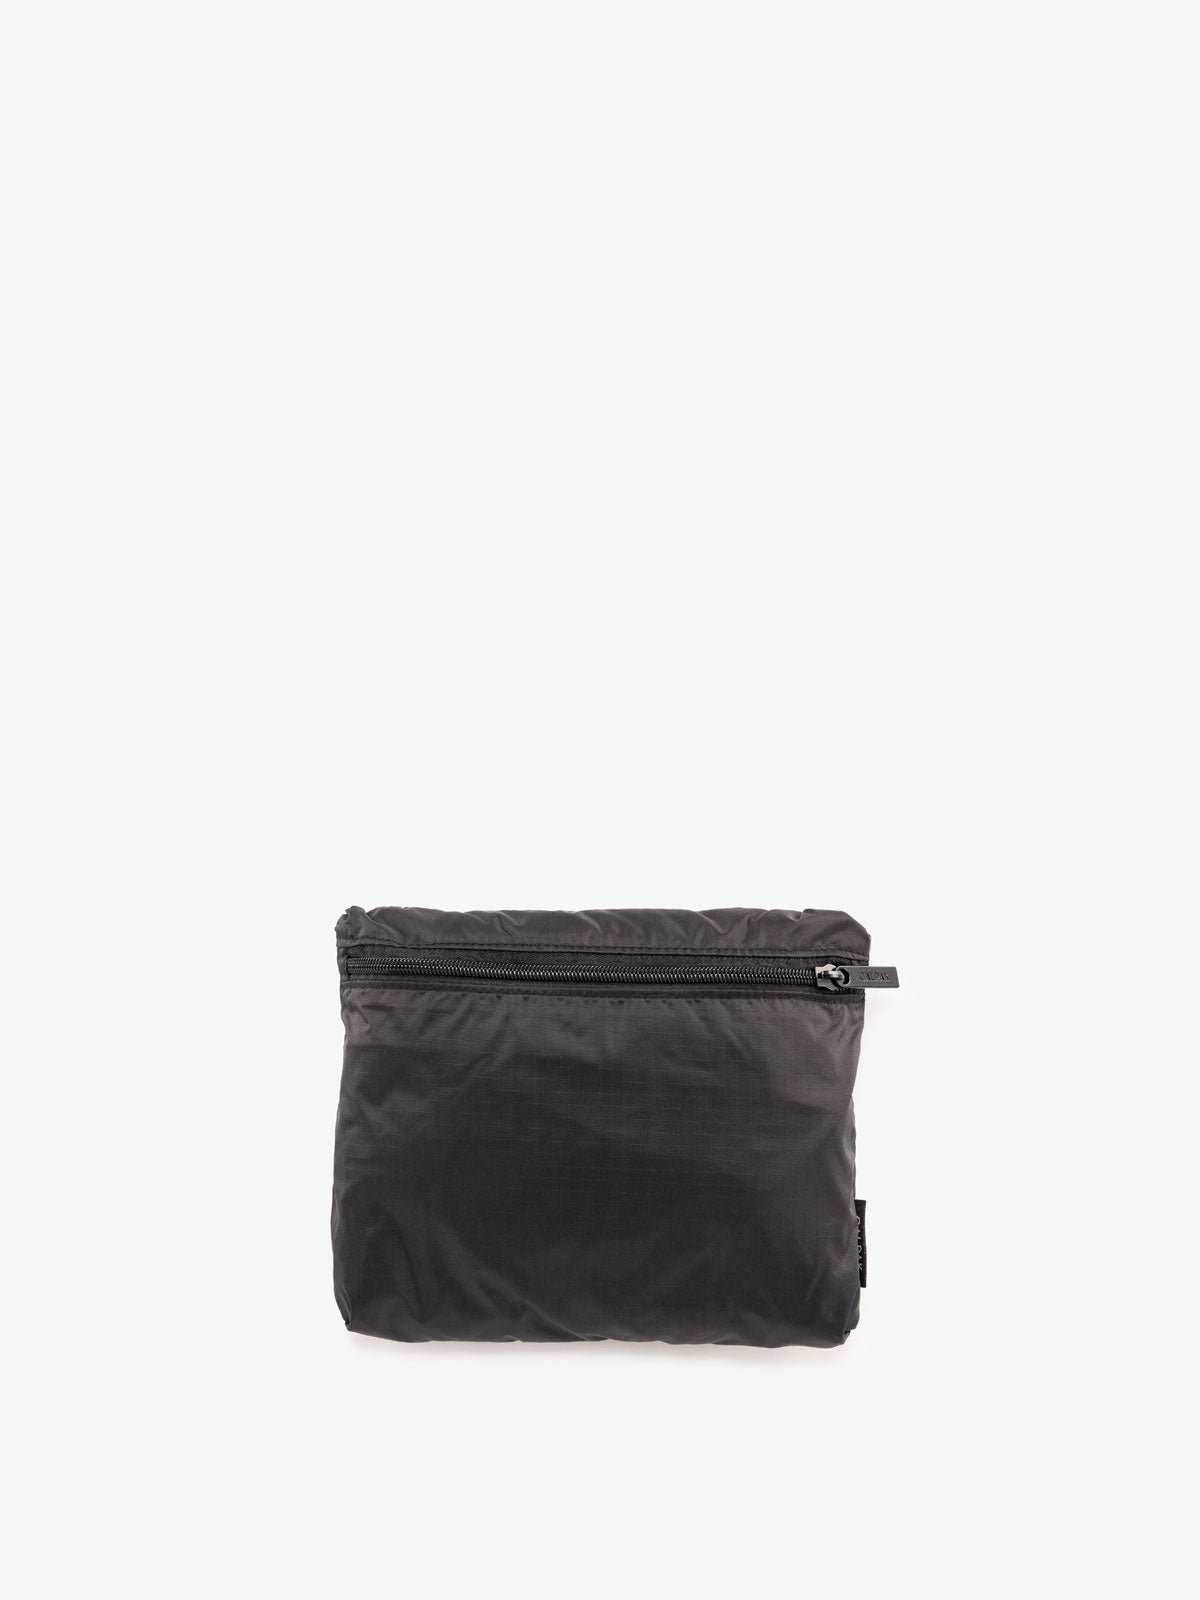 CALPAK spacious duffle bag foldable into pouch